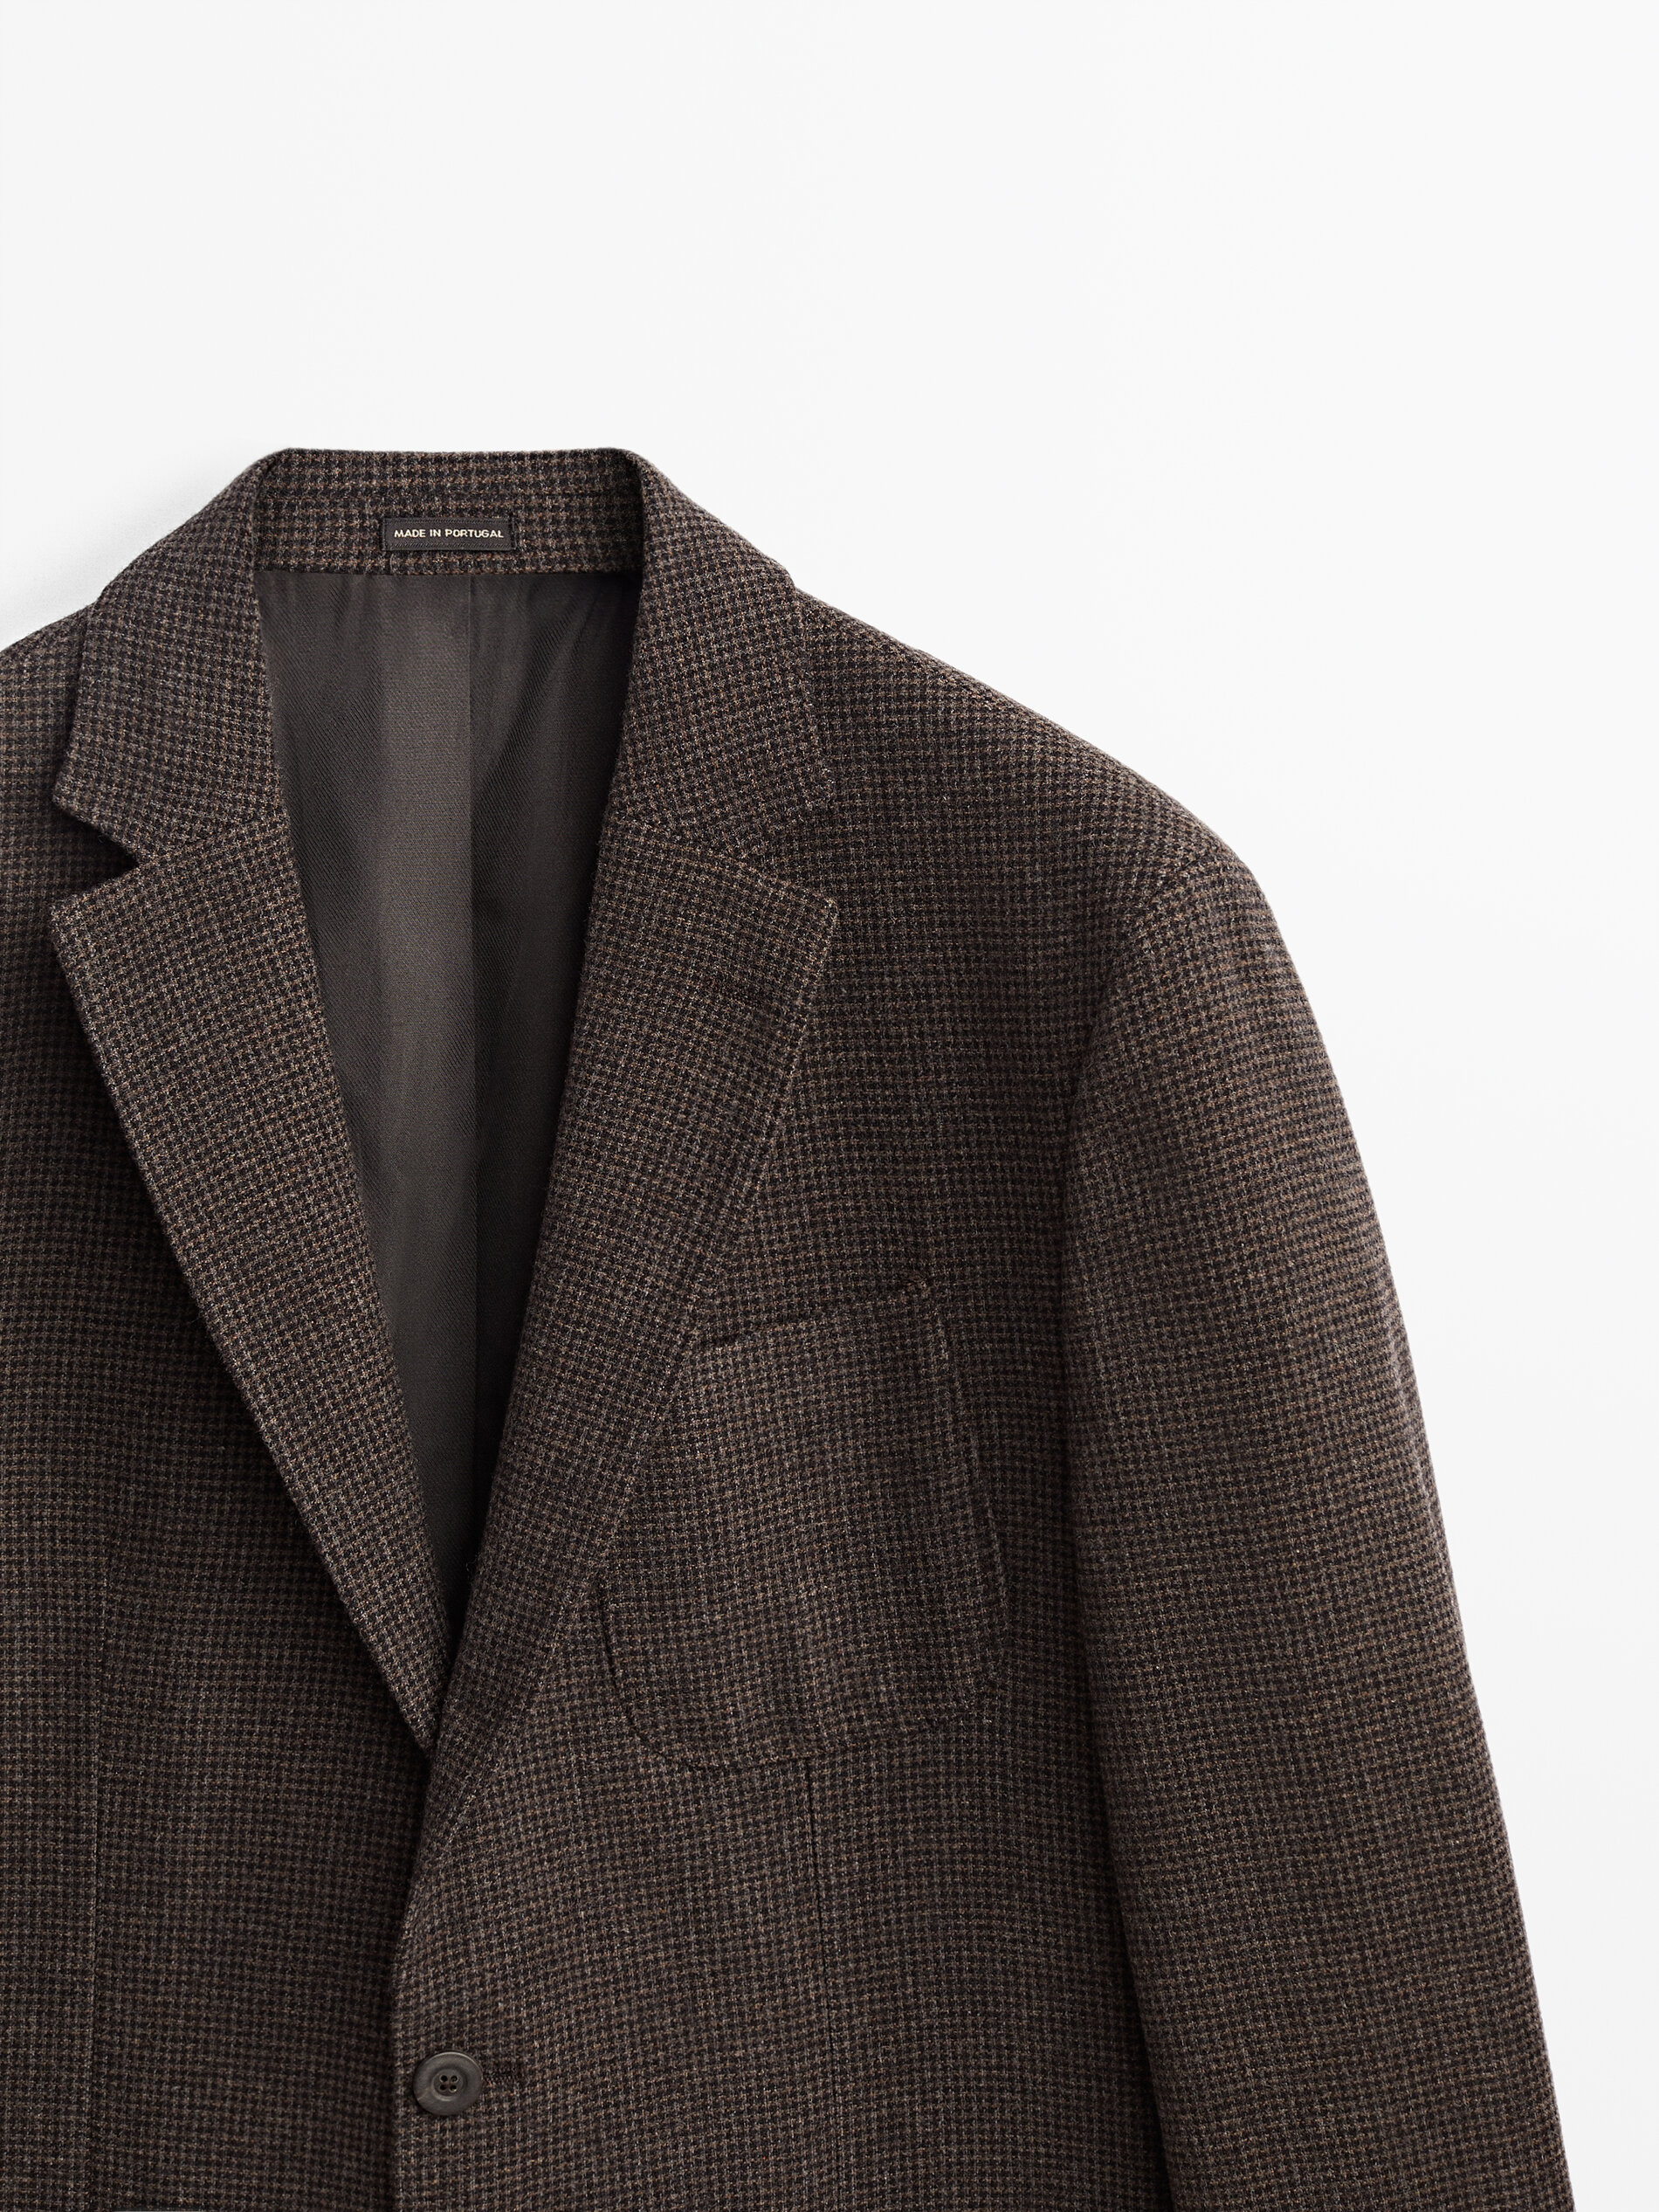 Massimo Dutti Brown Textured Cashmere Wool Blazer - Big Apple Buddy